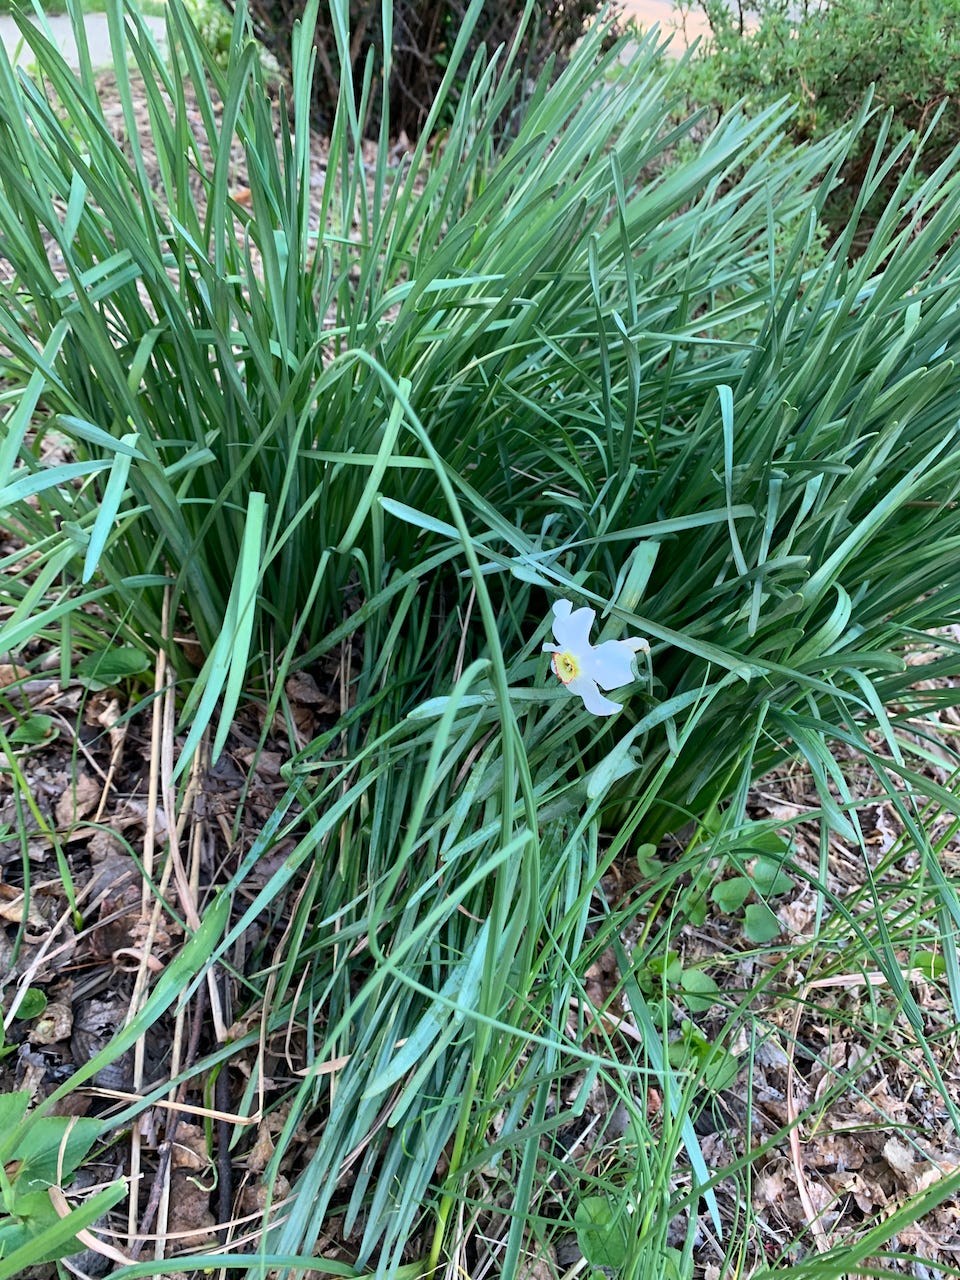 Many greens around one narcissus flower